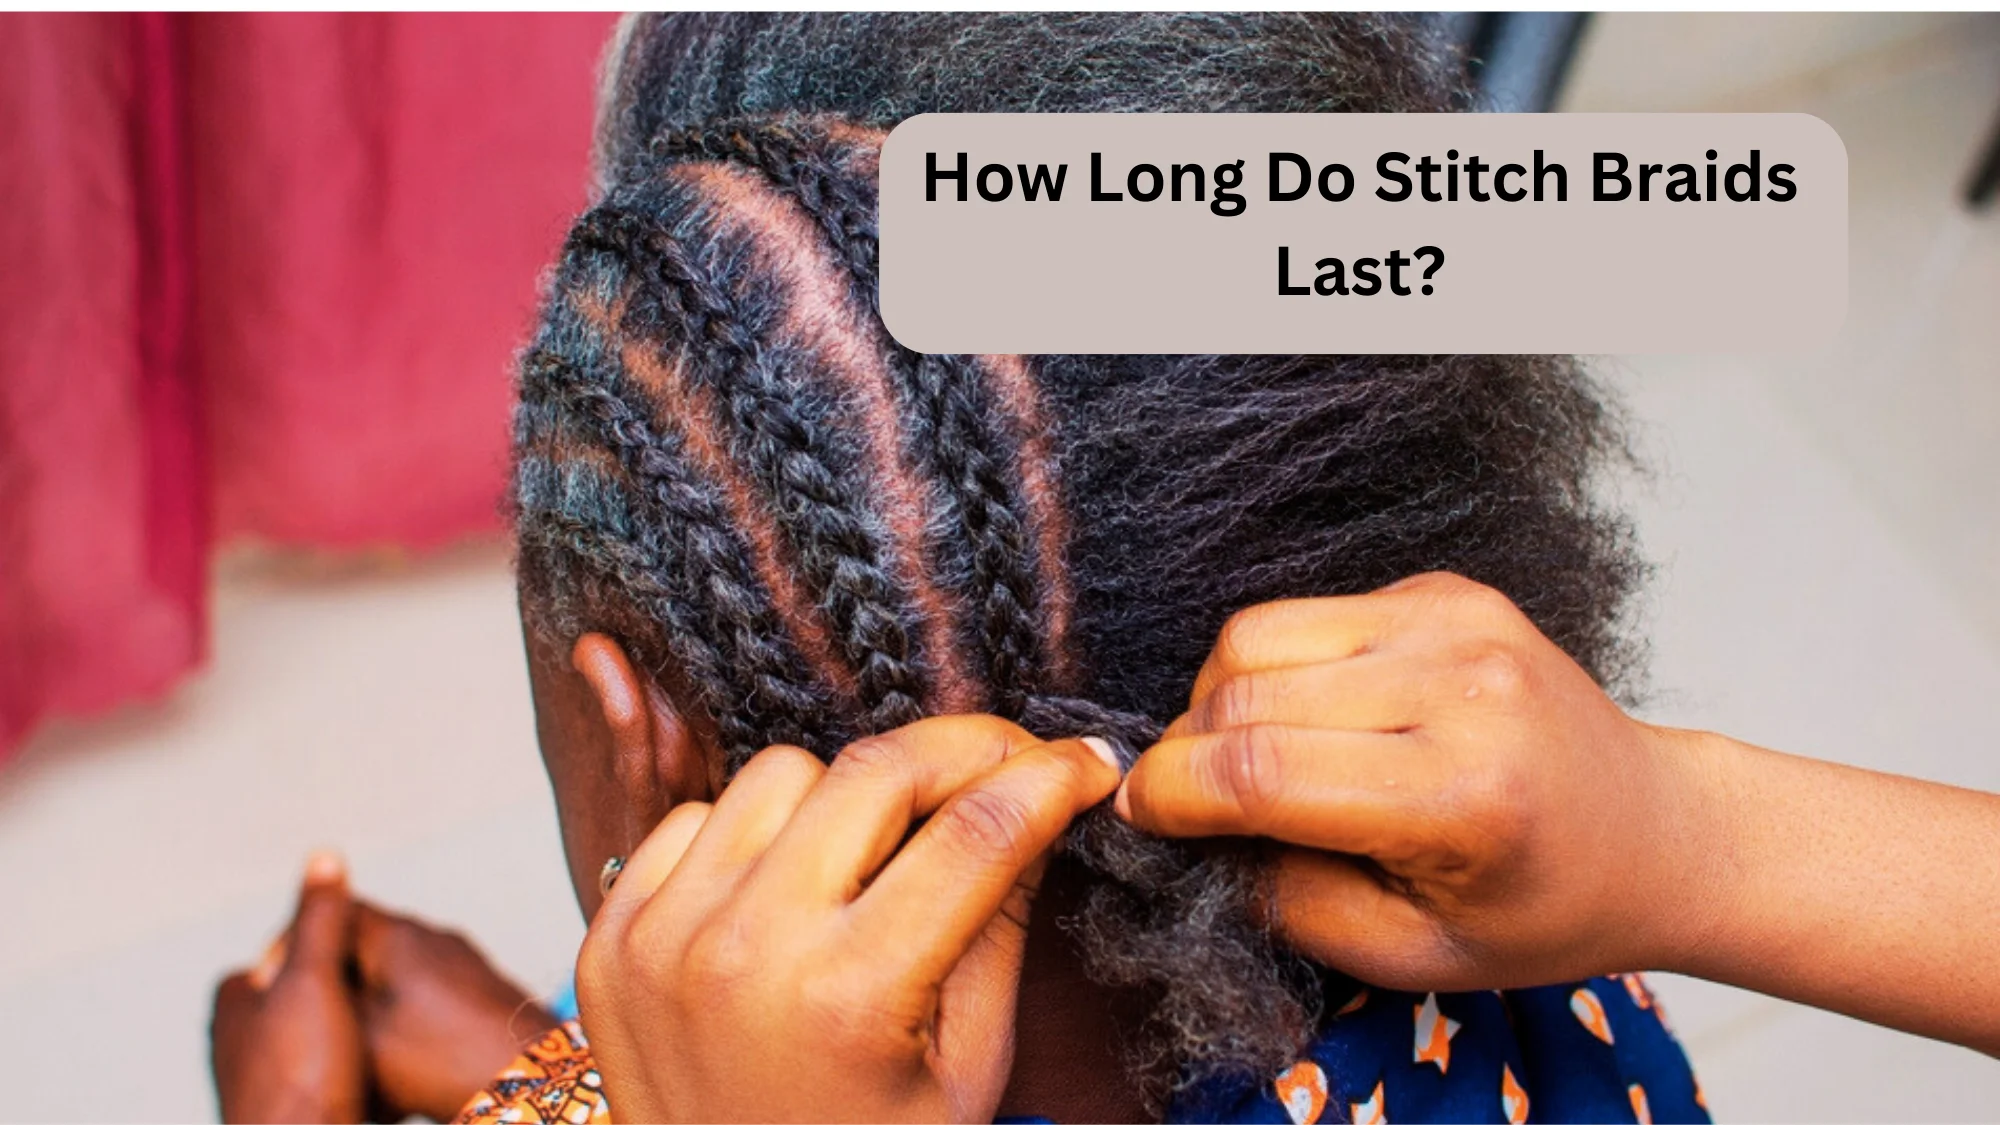 How Long Do Stitch Braids Last?